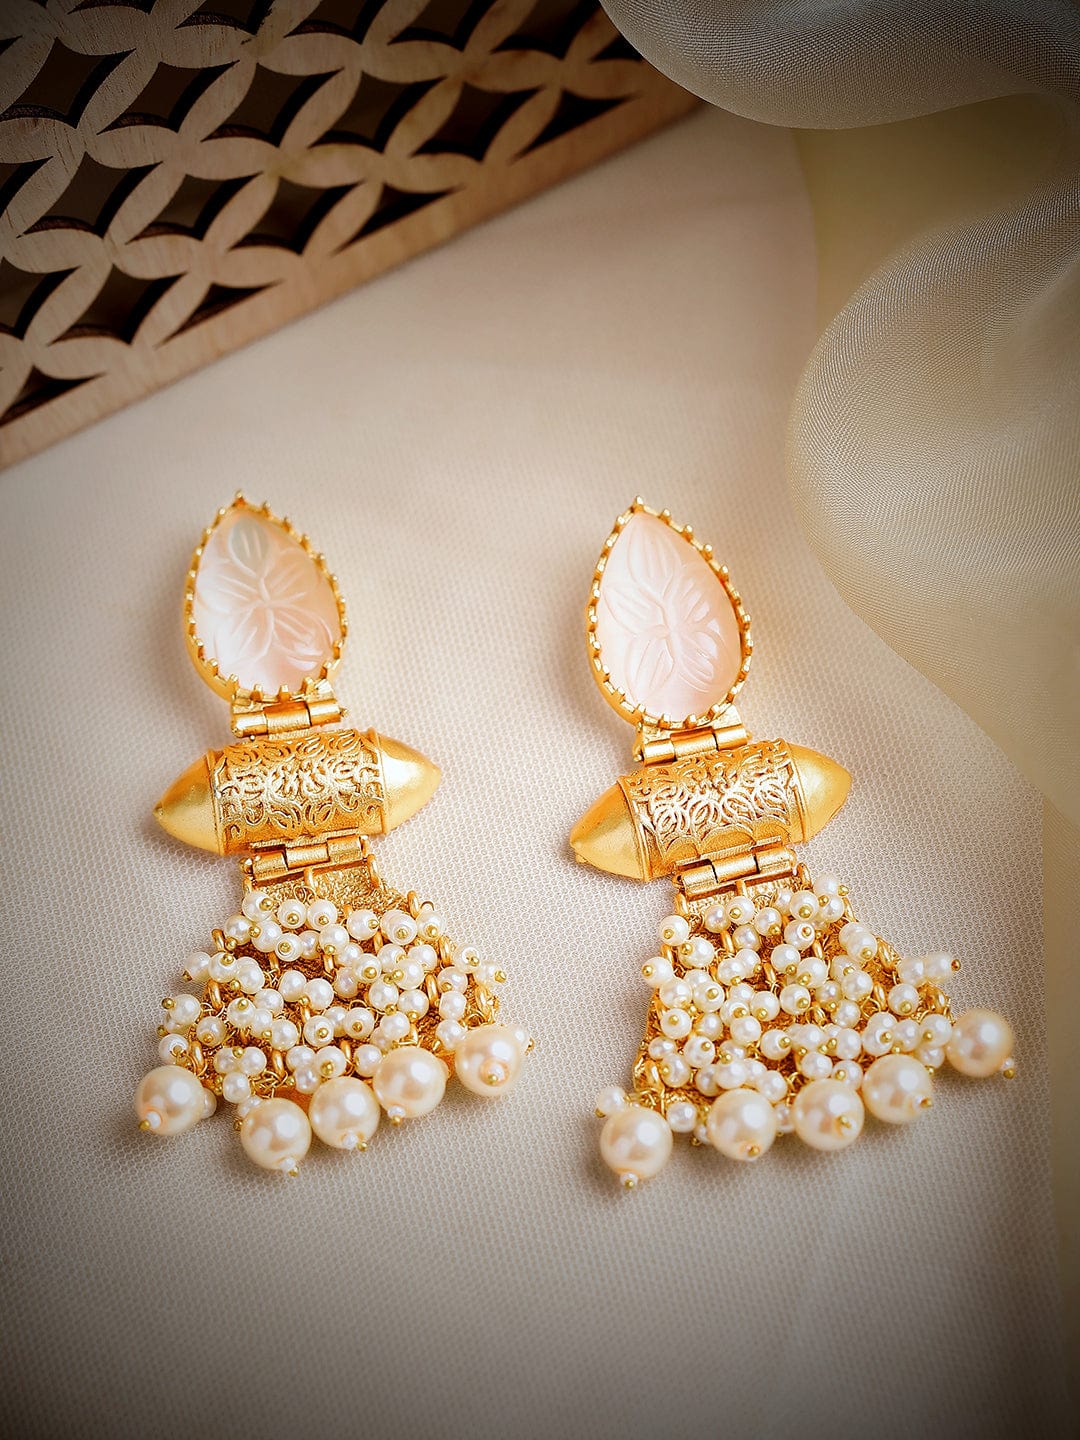 Buy 22K Gold Stud Earrings, Gold earrings jewelry, 5mm small studs online  at aStudio1980.com